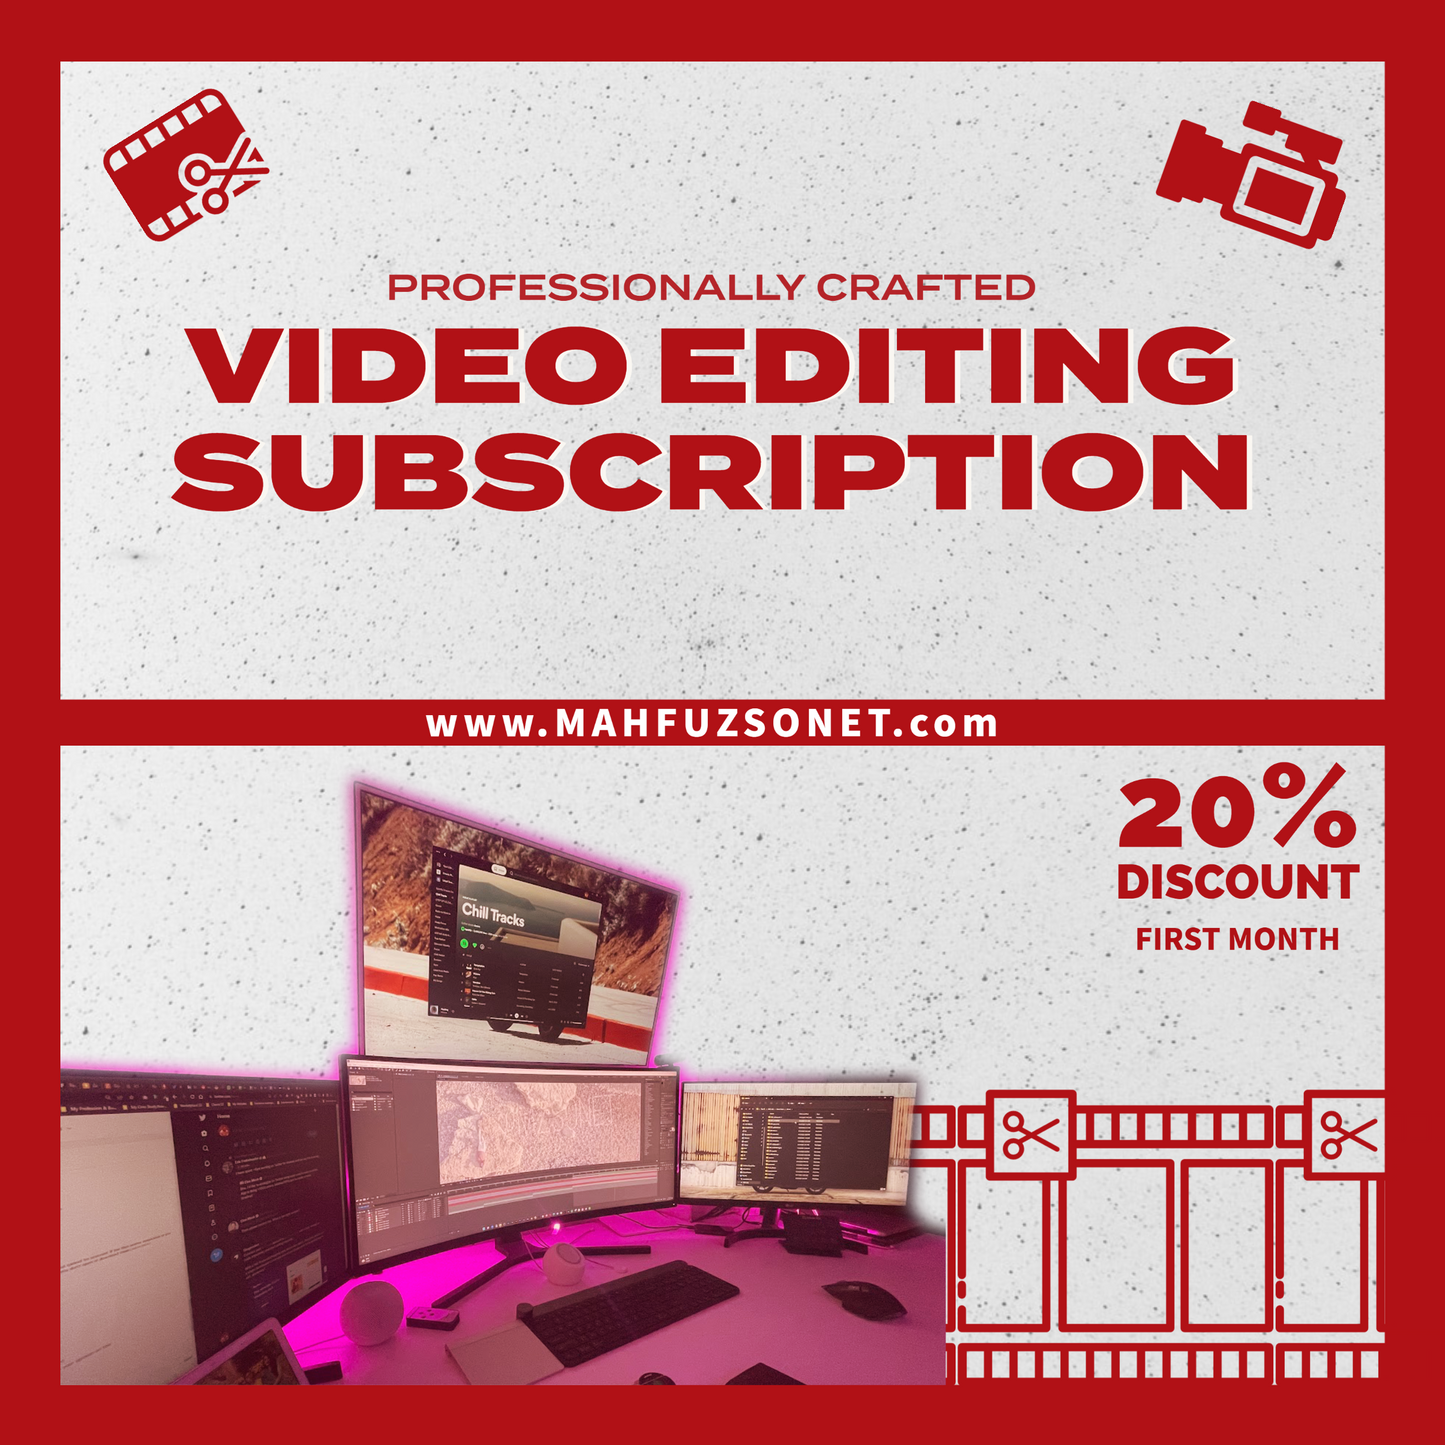 Mahfuz-sonet-freelance-video-editing-subscription